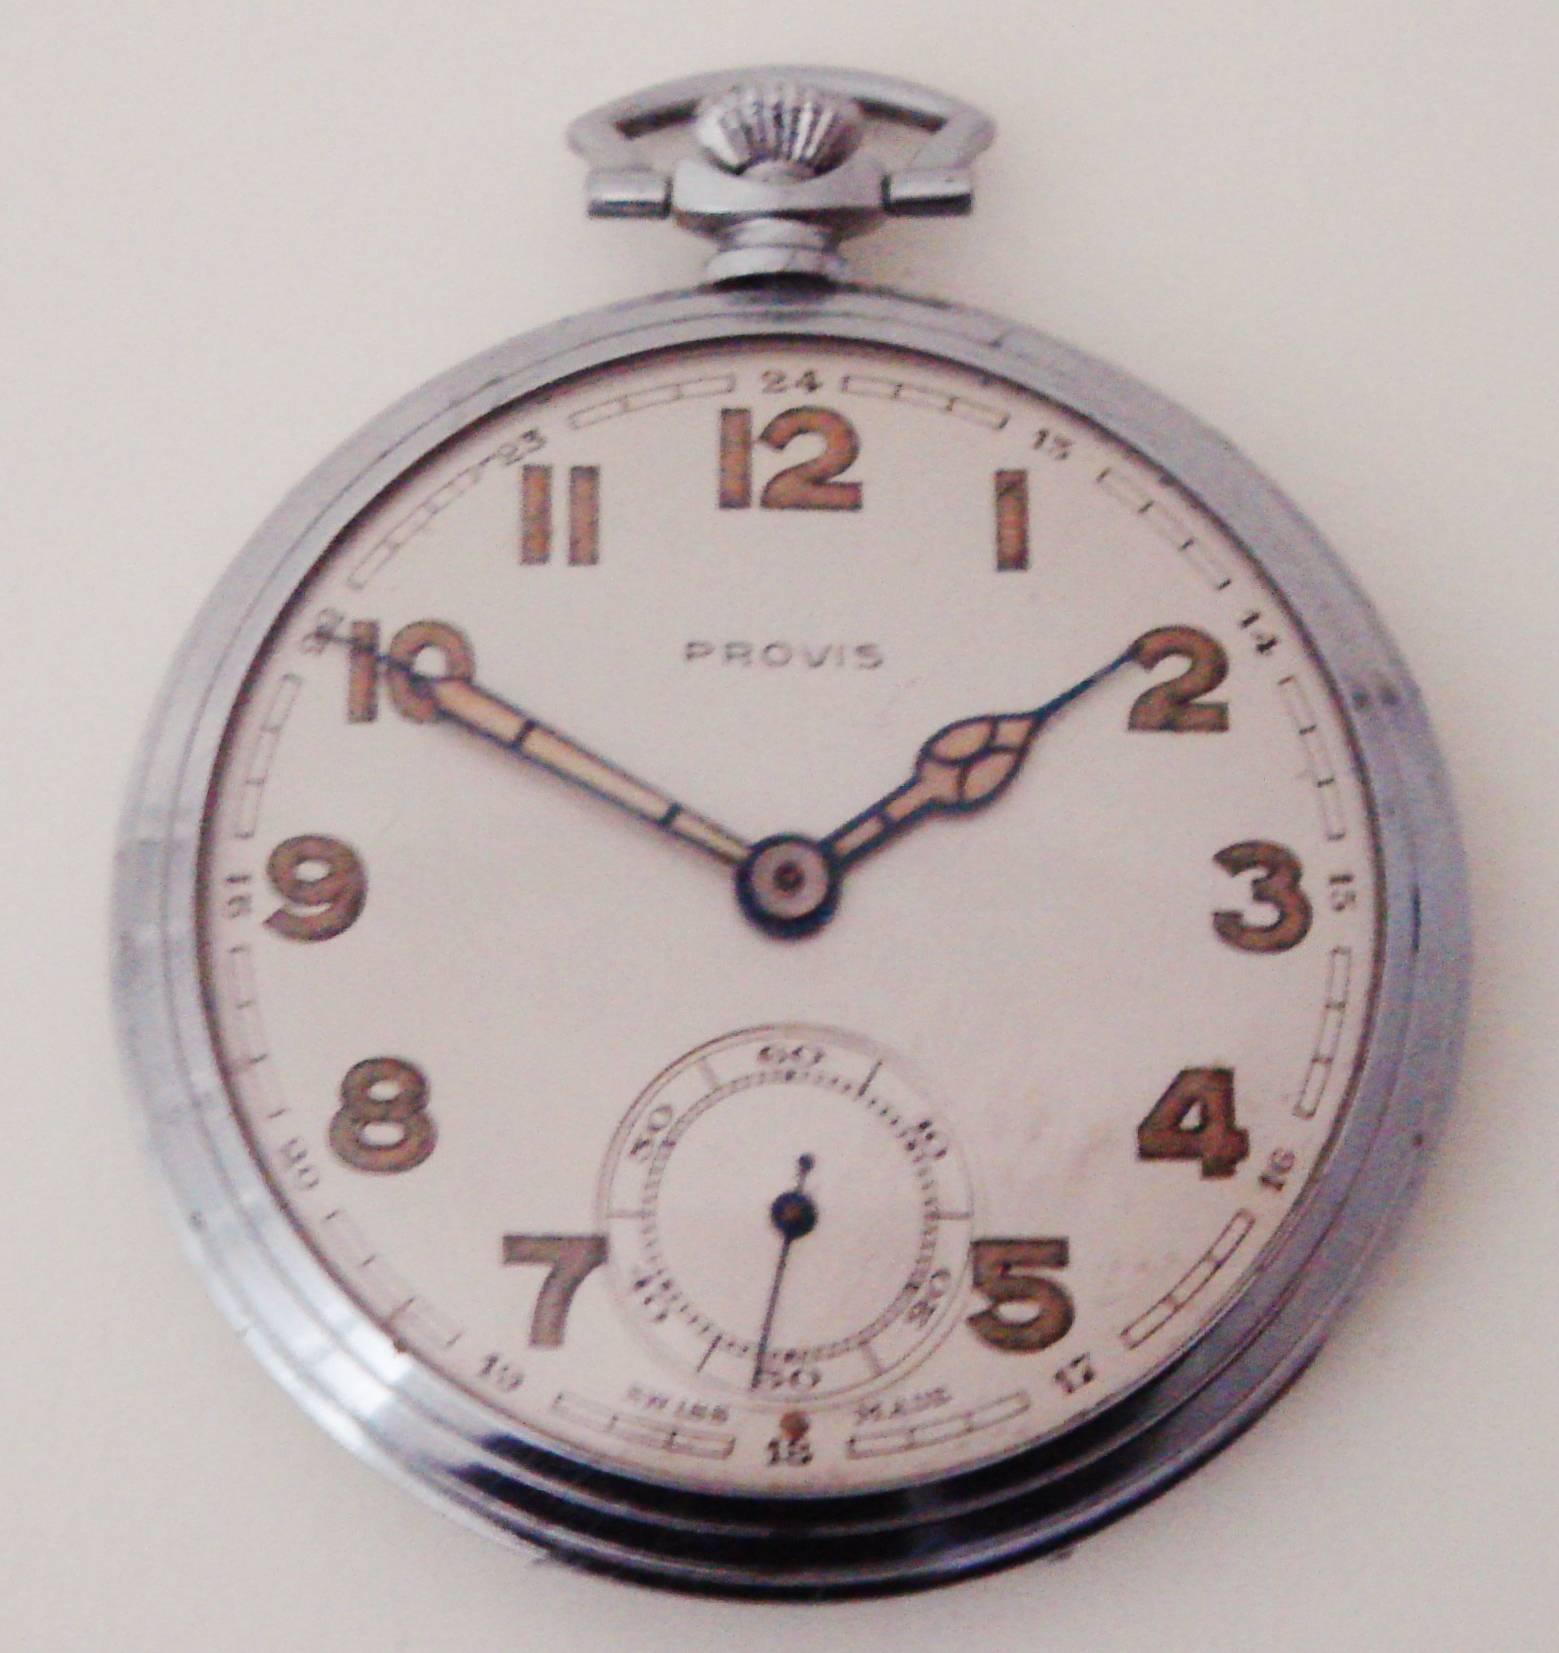 American Art Deco Black & Chrome Pocket Watch Holder with Swiss Watch by Provis 1